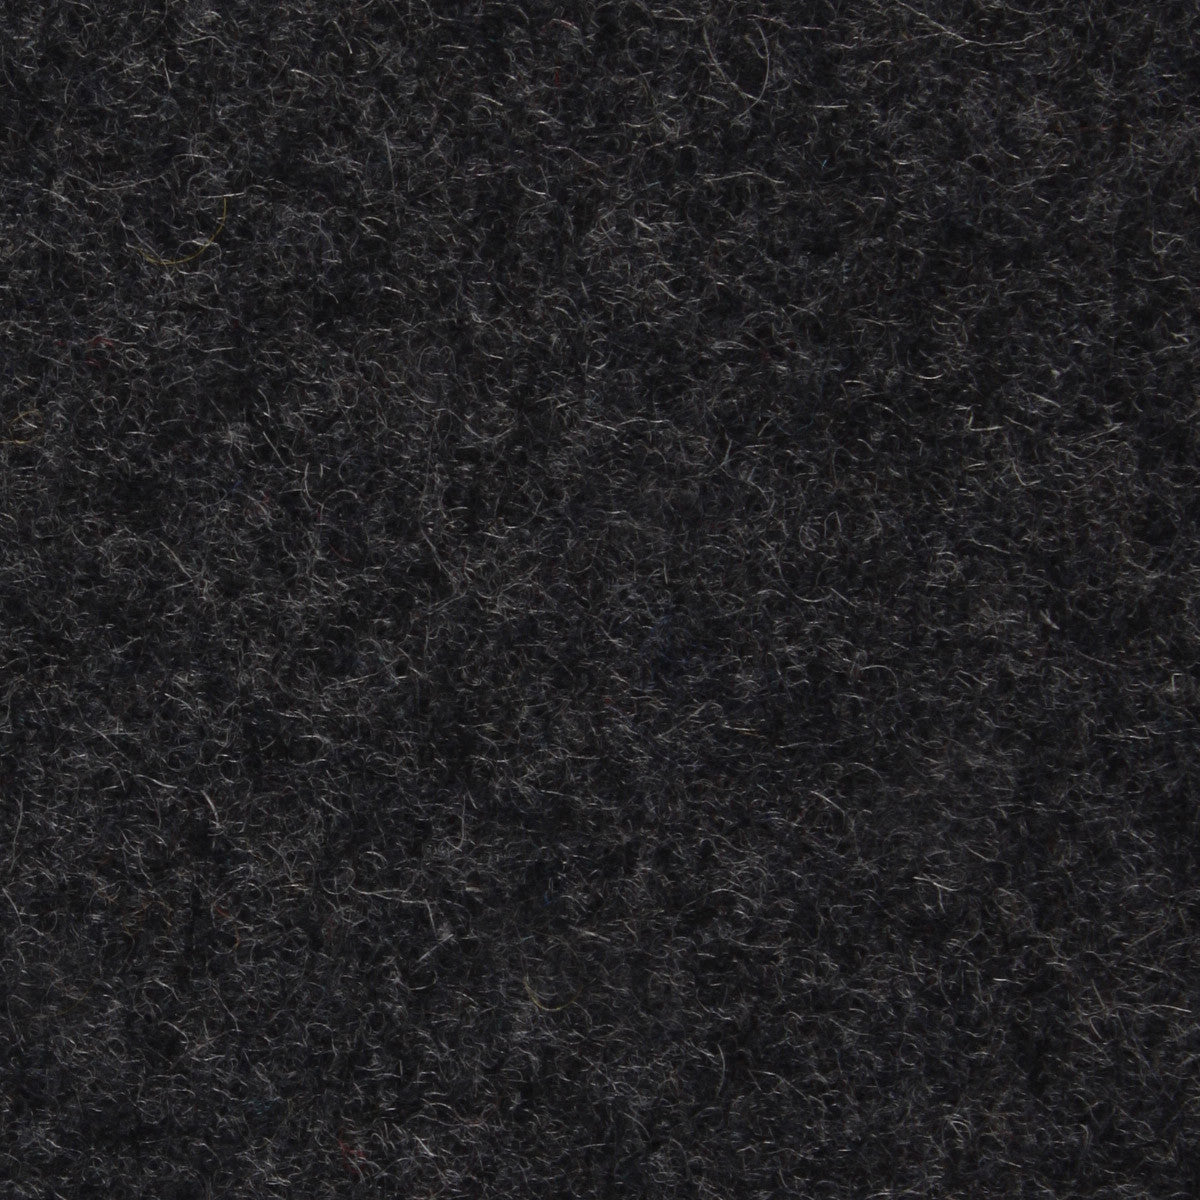 Charcoal Grey Dorset Wool Fabric Pocket Square